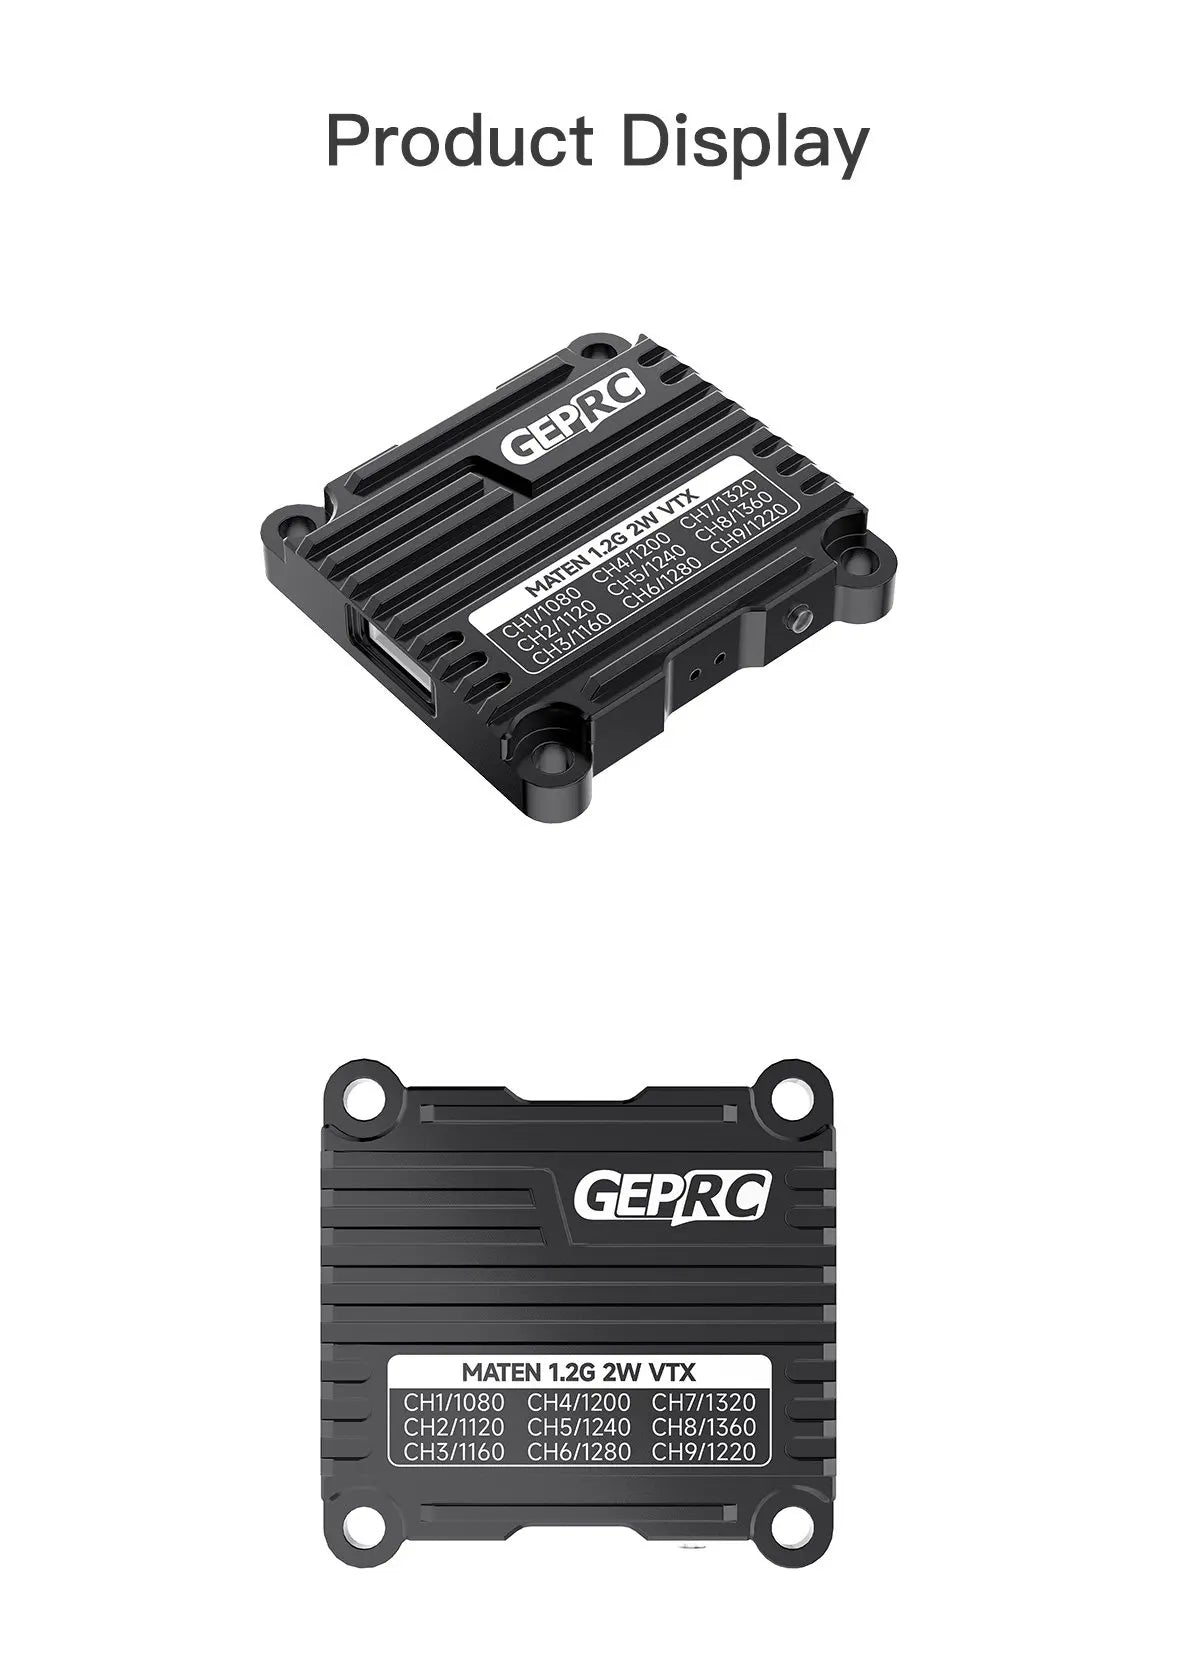 the GEPRC MATEN 1.2G 2W VTX high-power image transmission